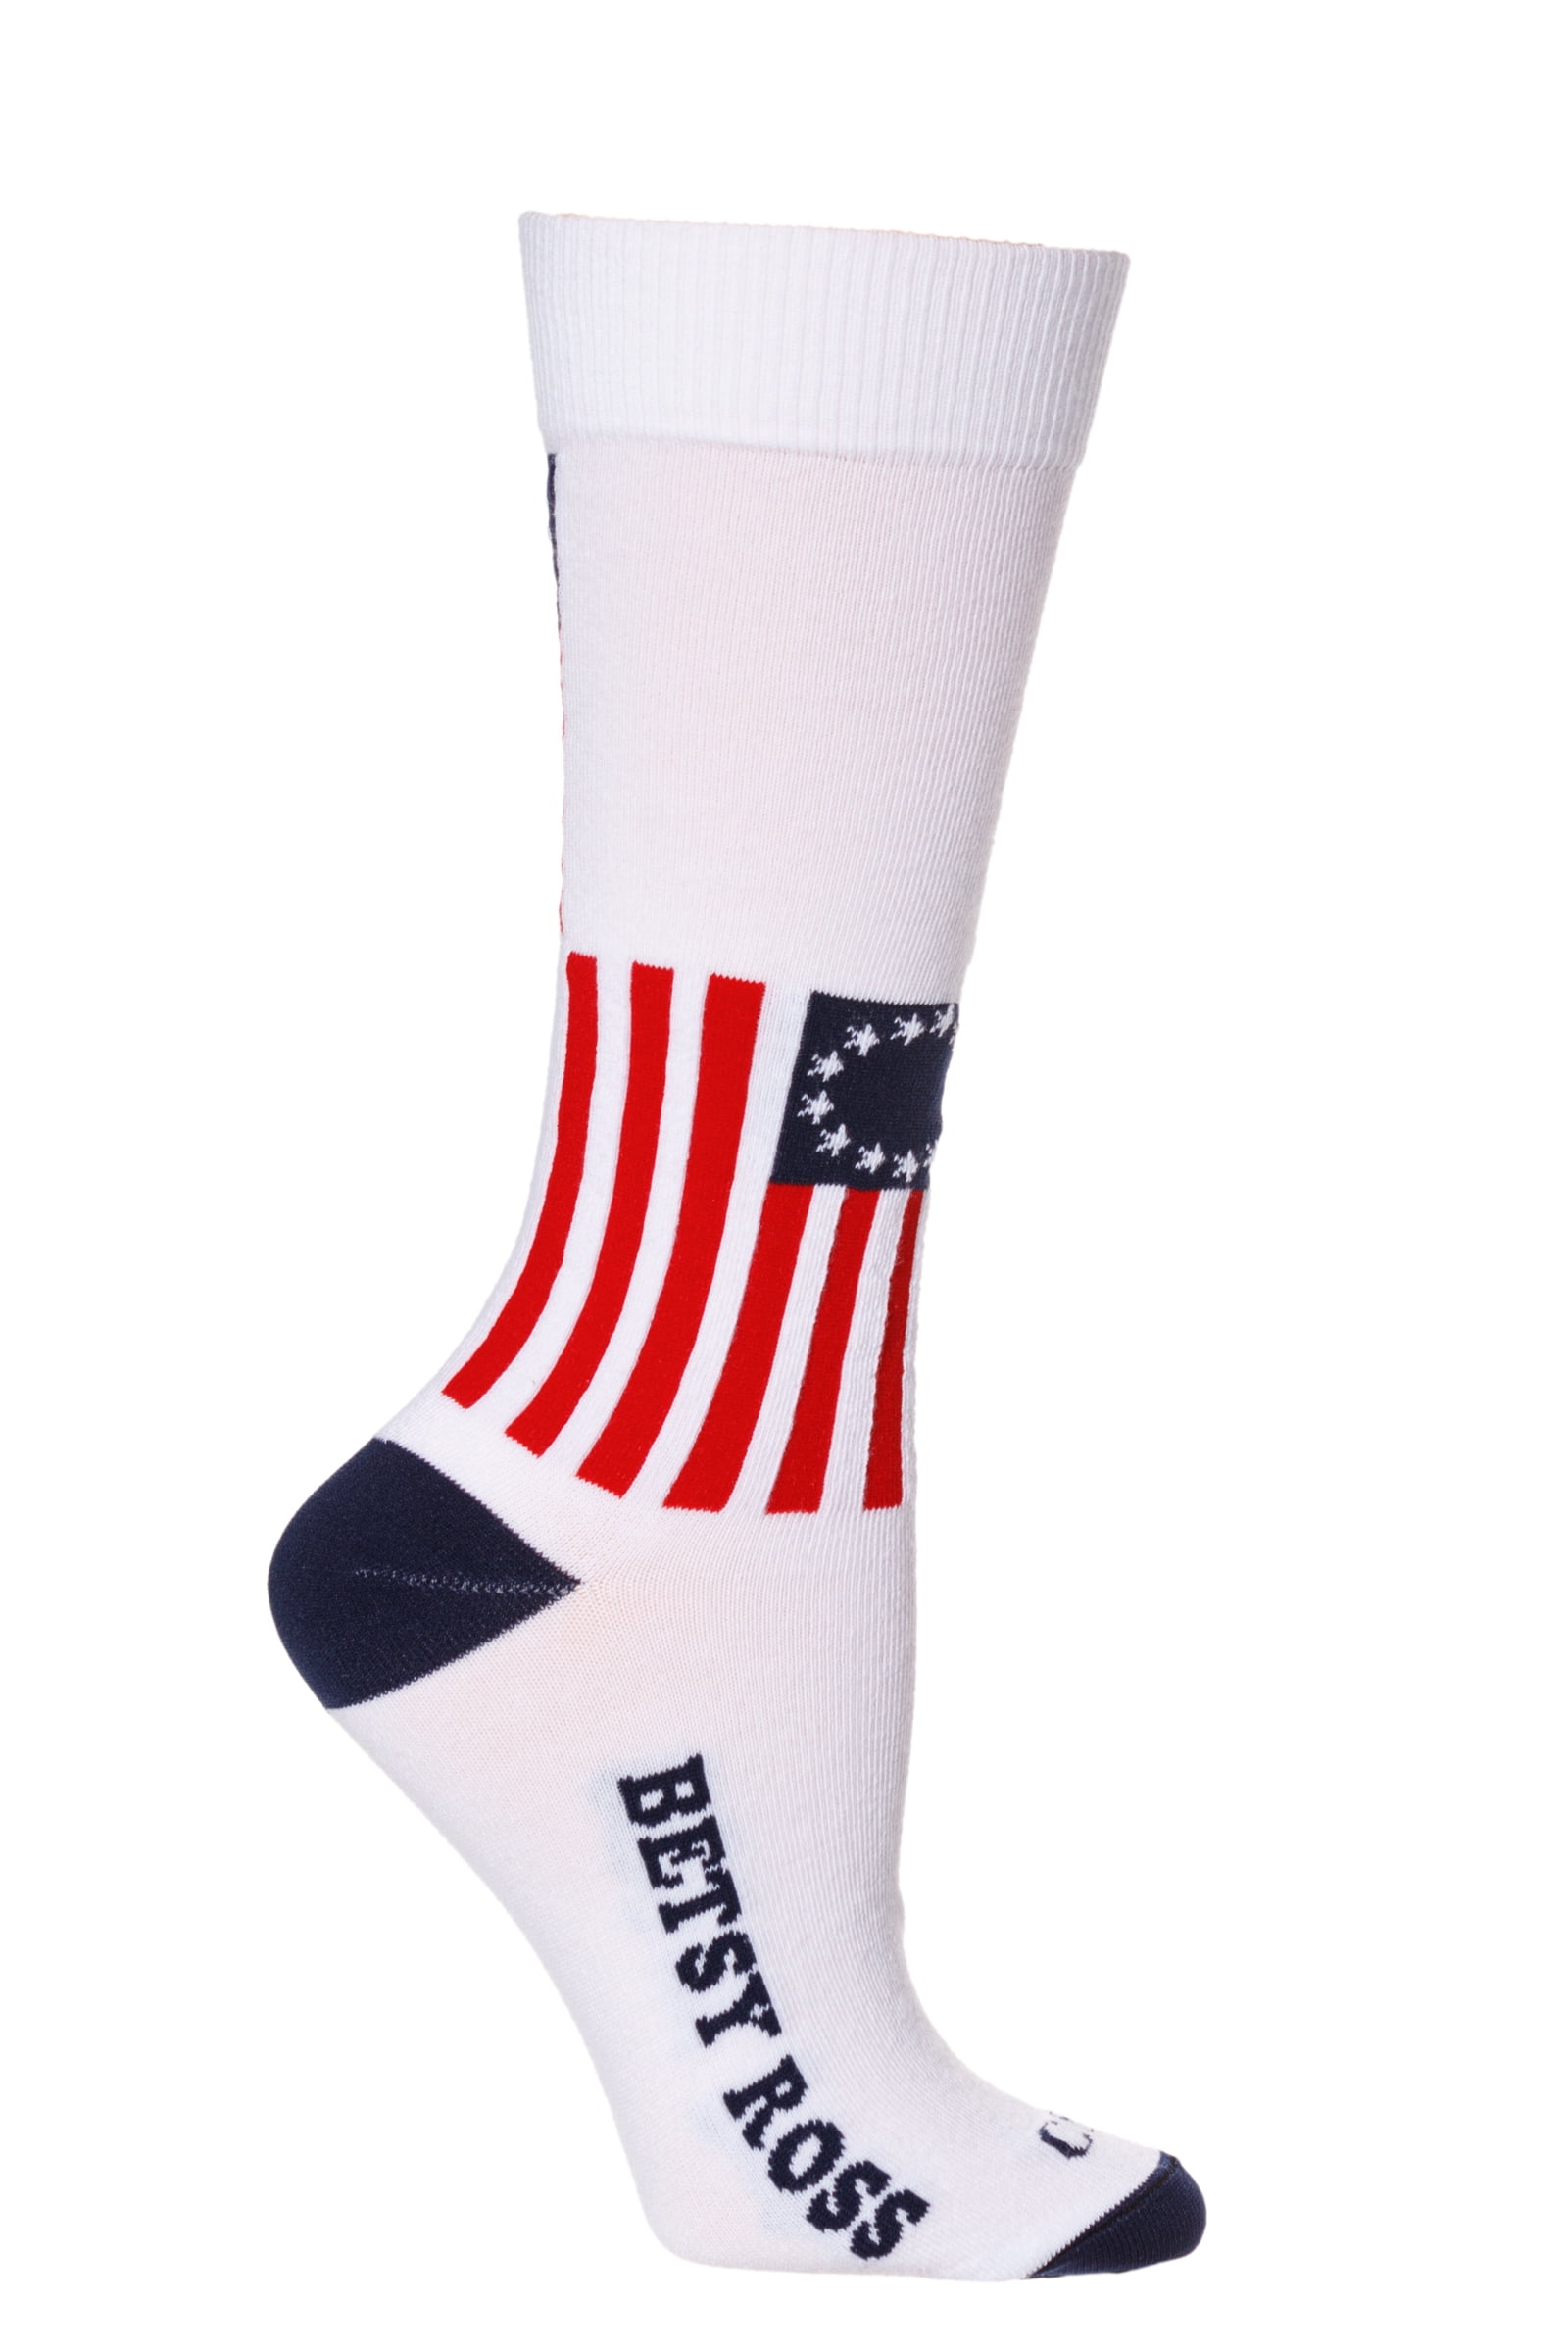 Betsy Ross Dress Sock Made In the USA - Walmart.com